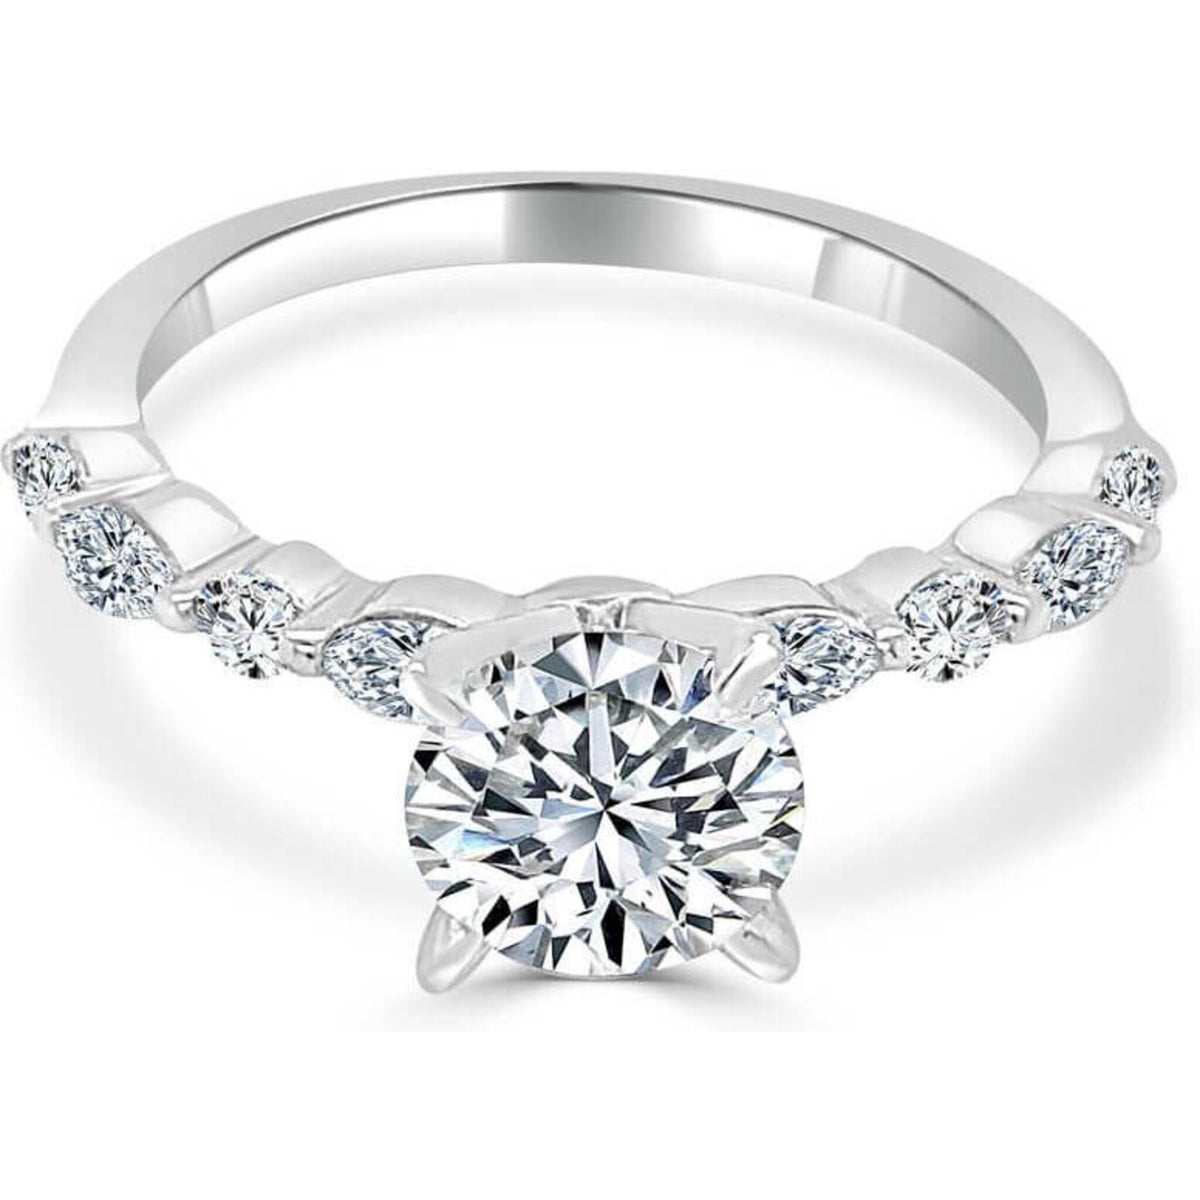 Imagine Bridal Diamond Engagement Ring Semi-Mount